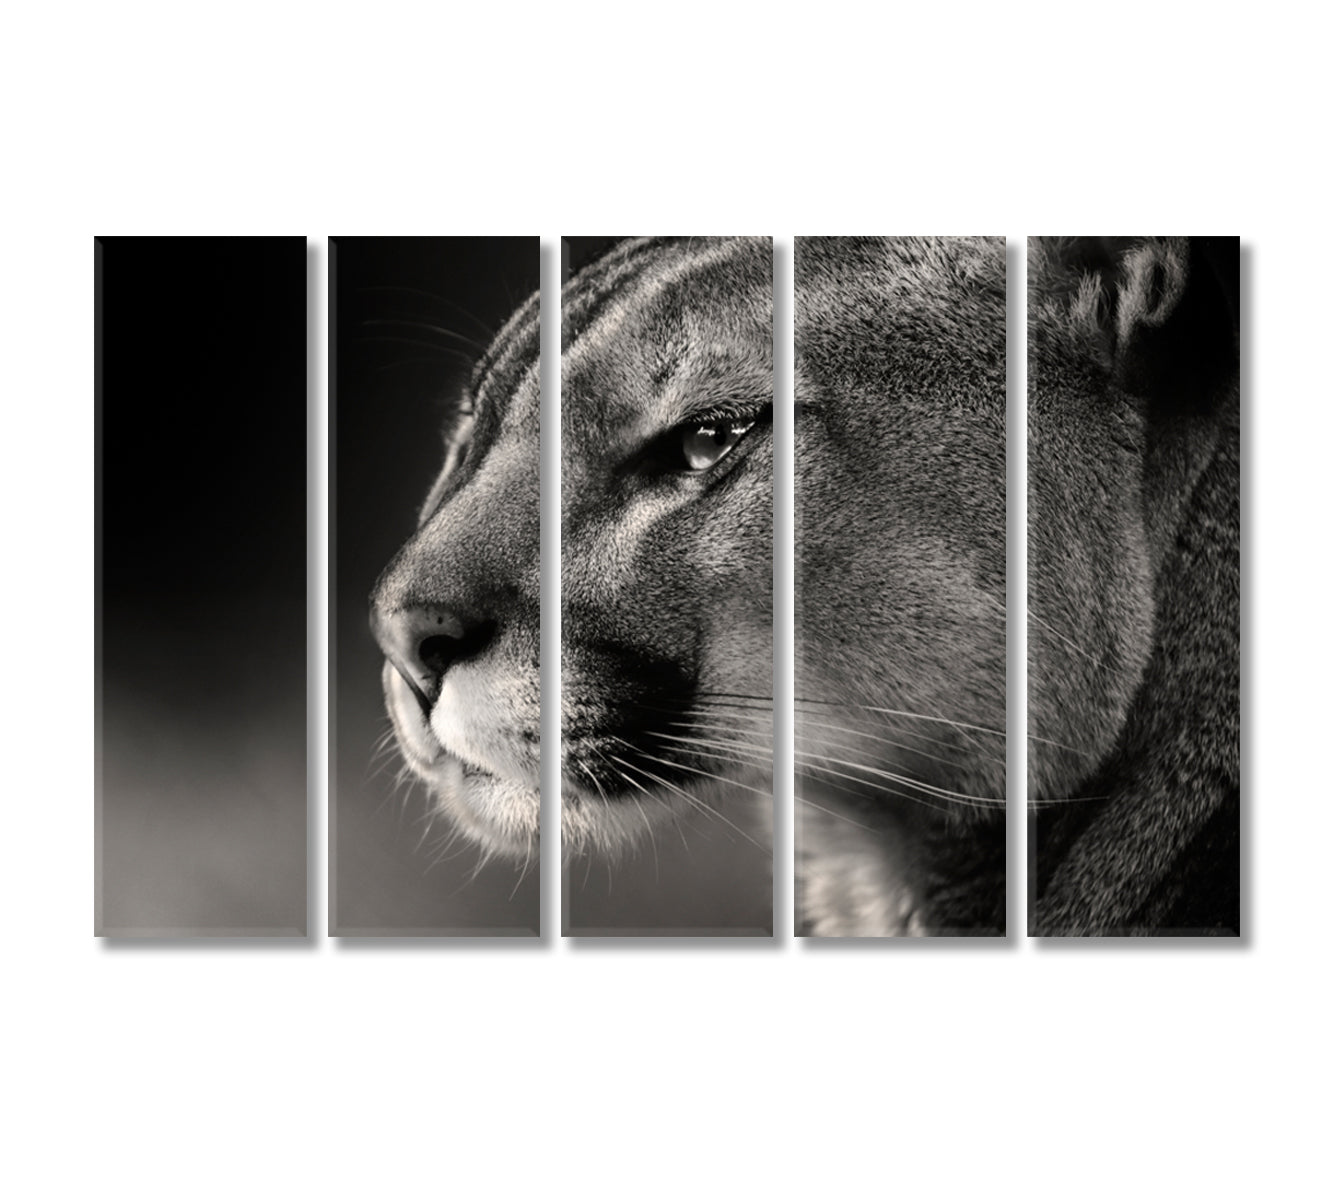 Cougar Face in Black White Canvas Print-Canvas Print-CetArt-5 Panels-36x24 inches-CetArt